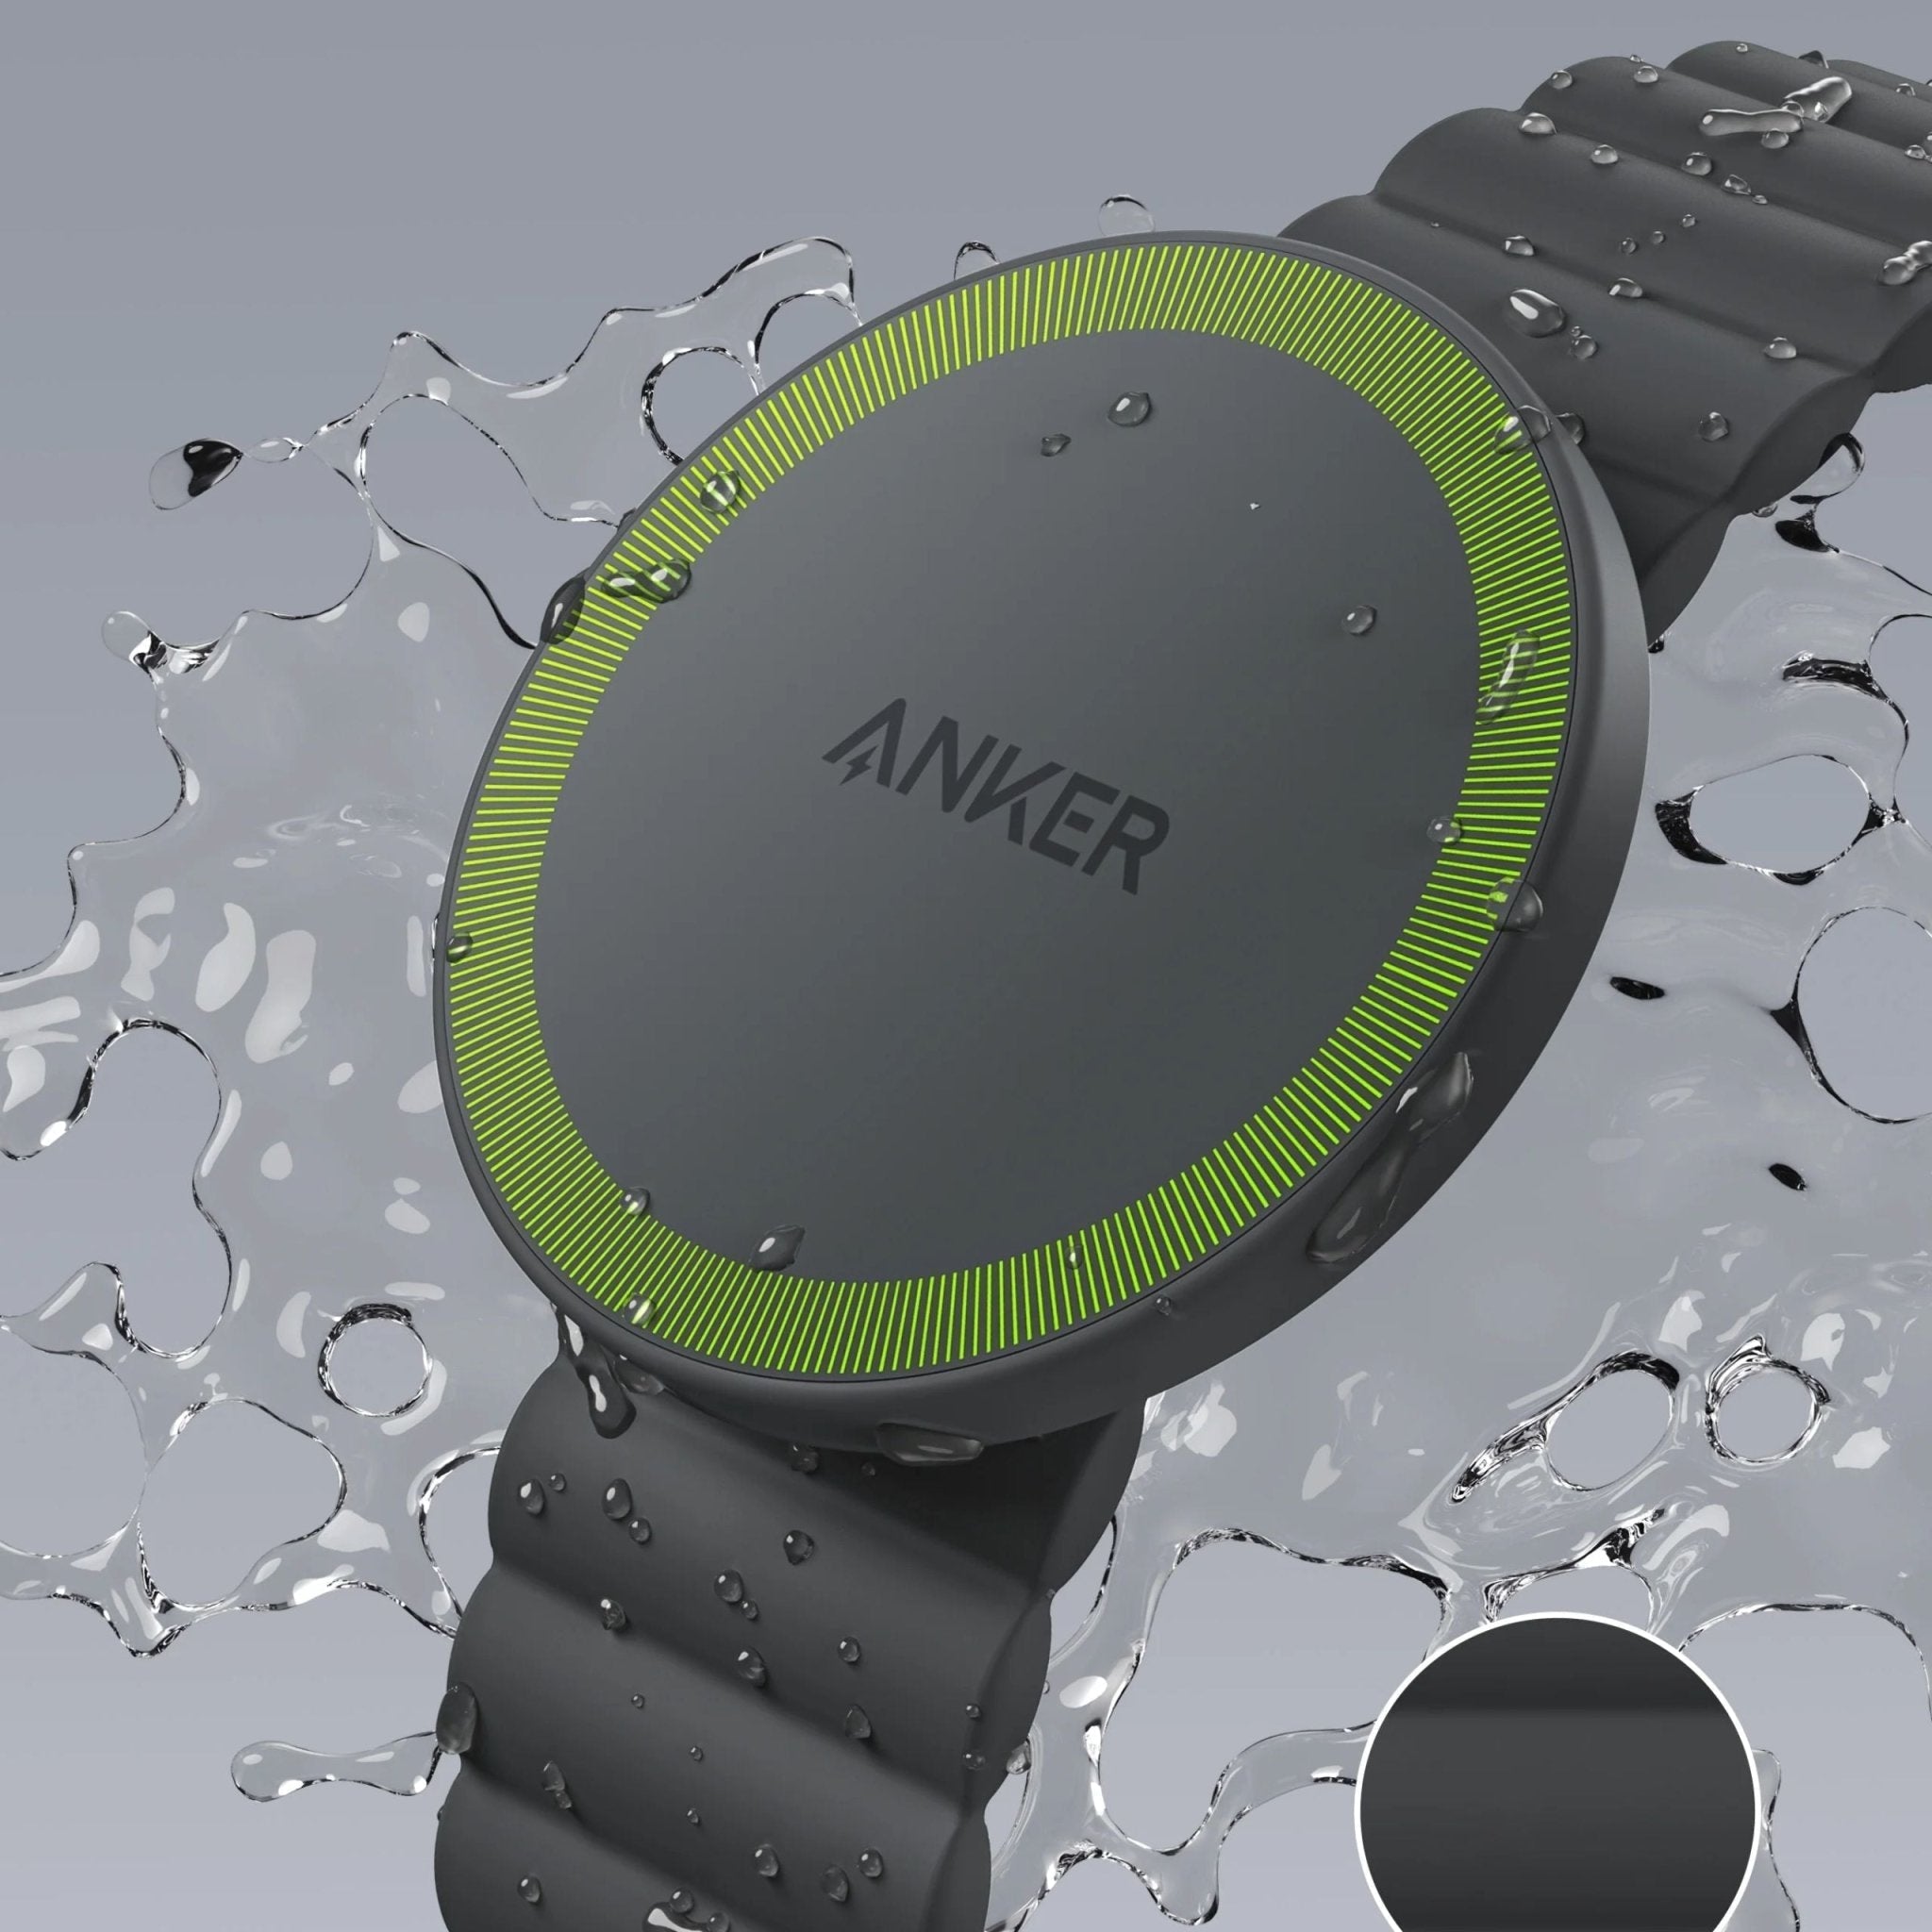 Anker 620 MagGo Phone Grip Dual Side Magnetic Holder For iPhone - Black